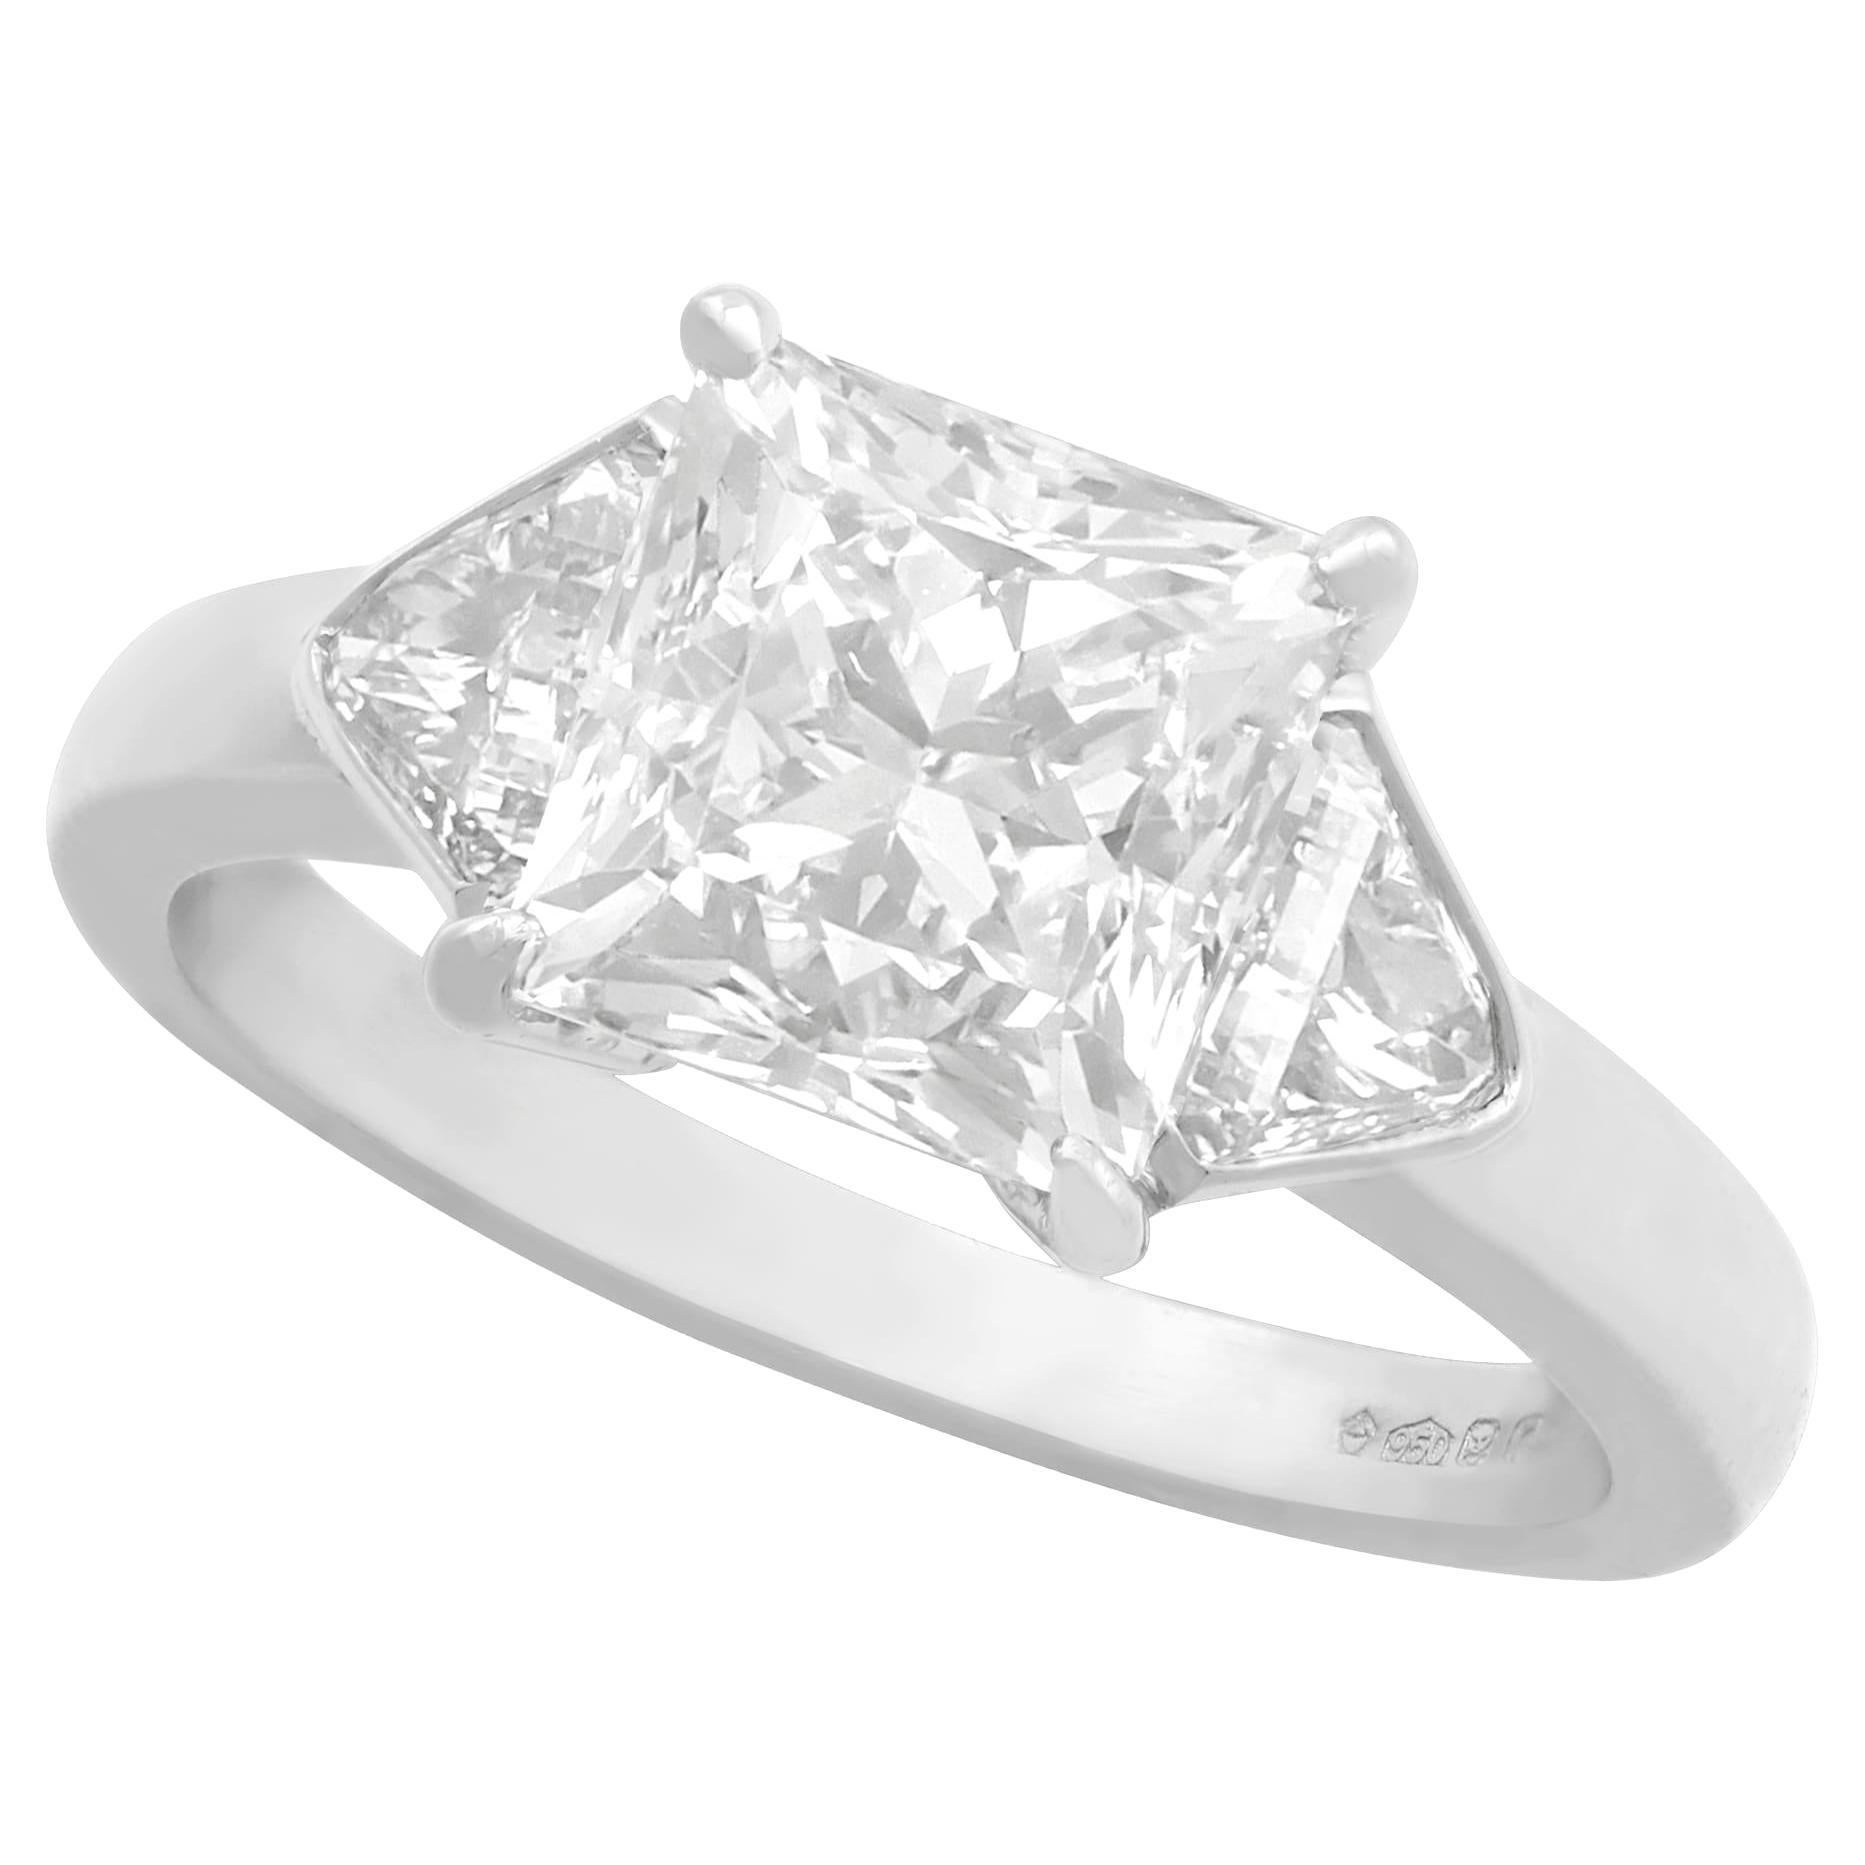 3.86 Carat Diamond and Platinum Engagement Ring